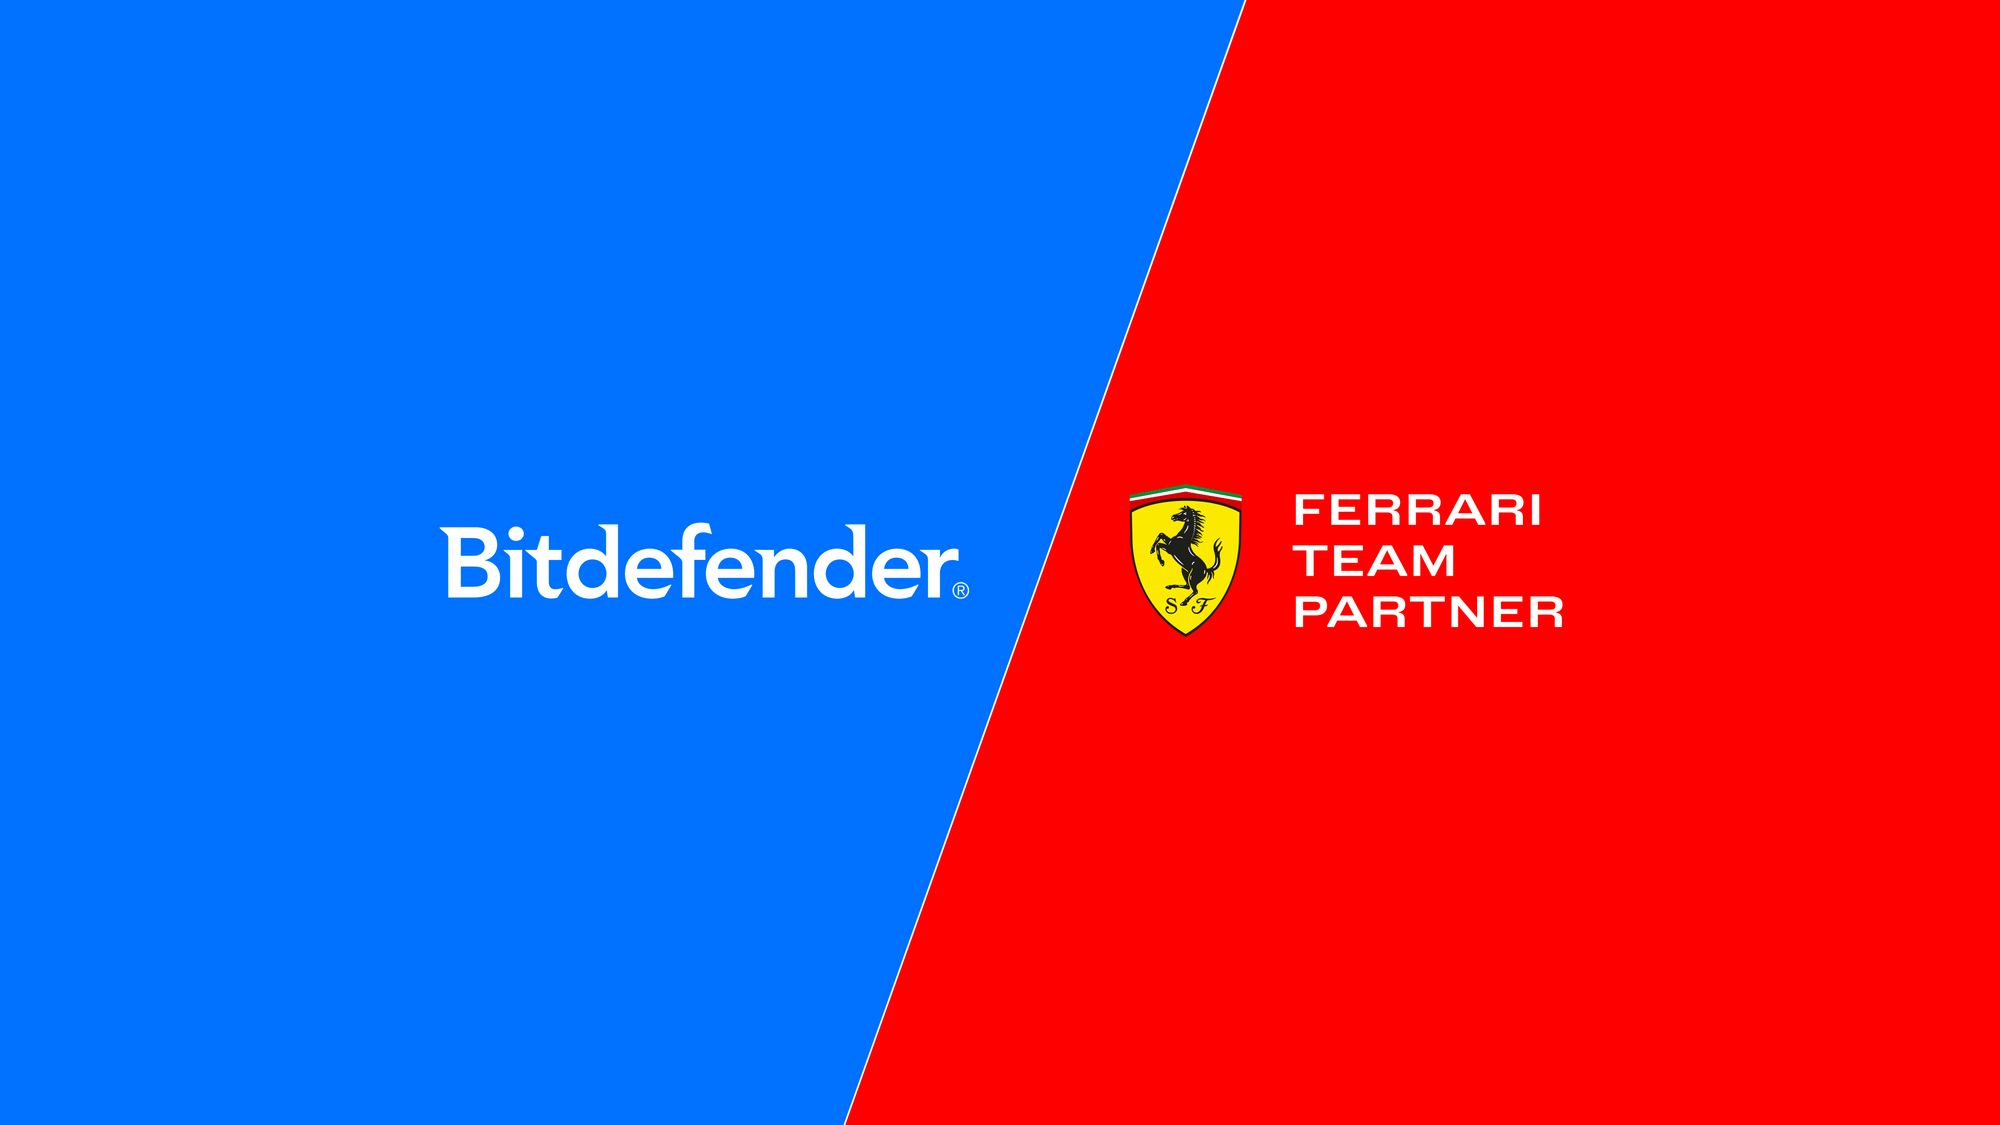 Bitdefender Ferrari partnership